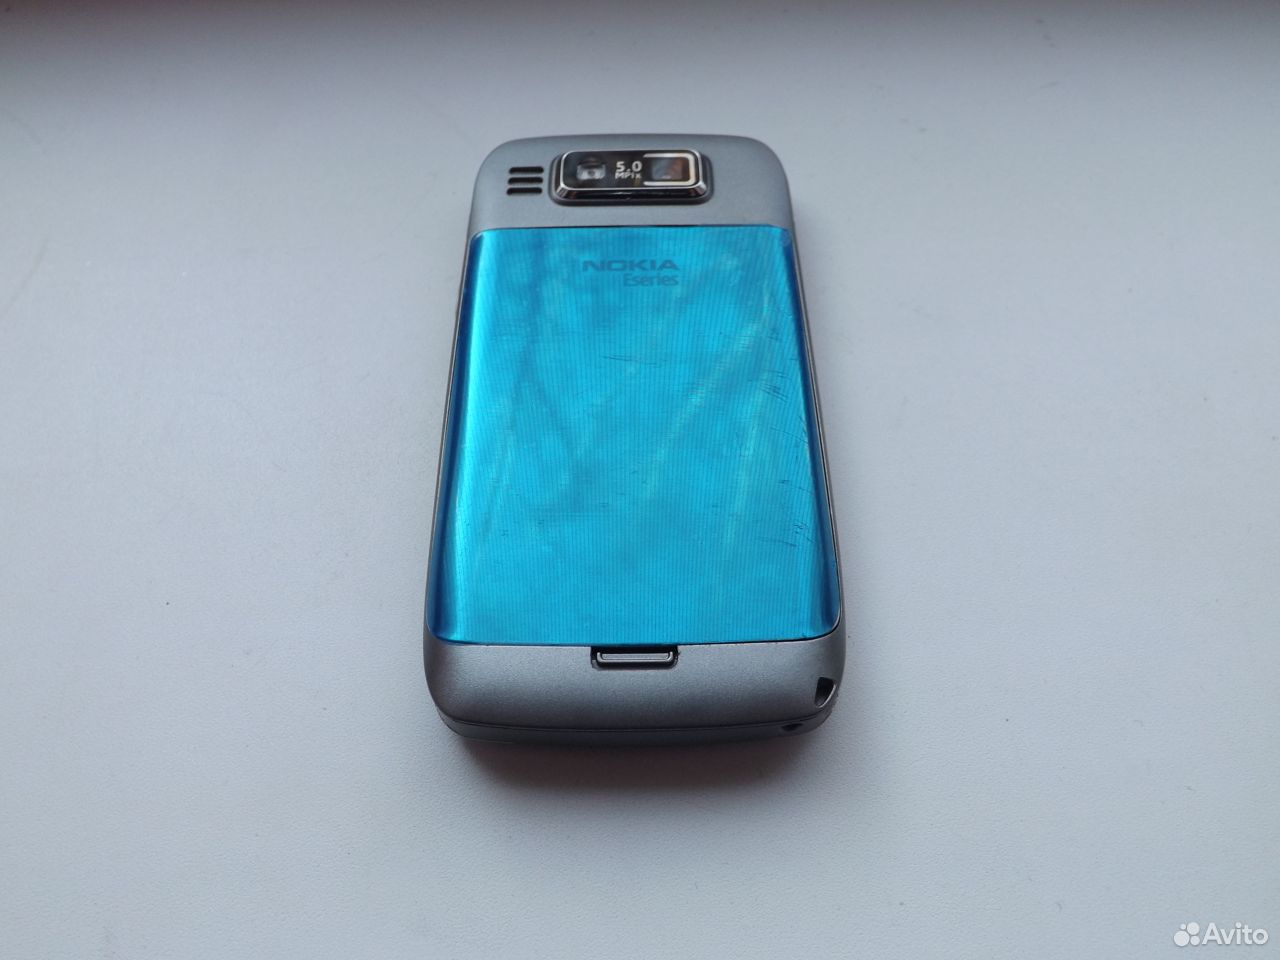 Nokia E72 Новый Symbian 5Mpx Wi-Fi 3G GPS Нокиа 89637385513 купить 4